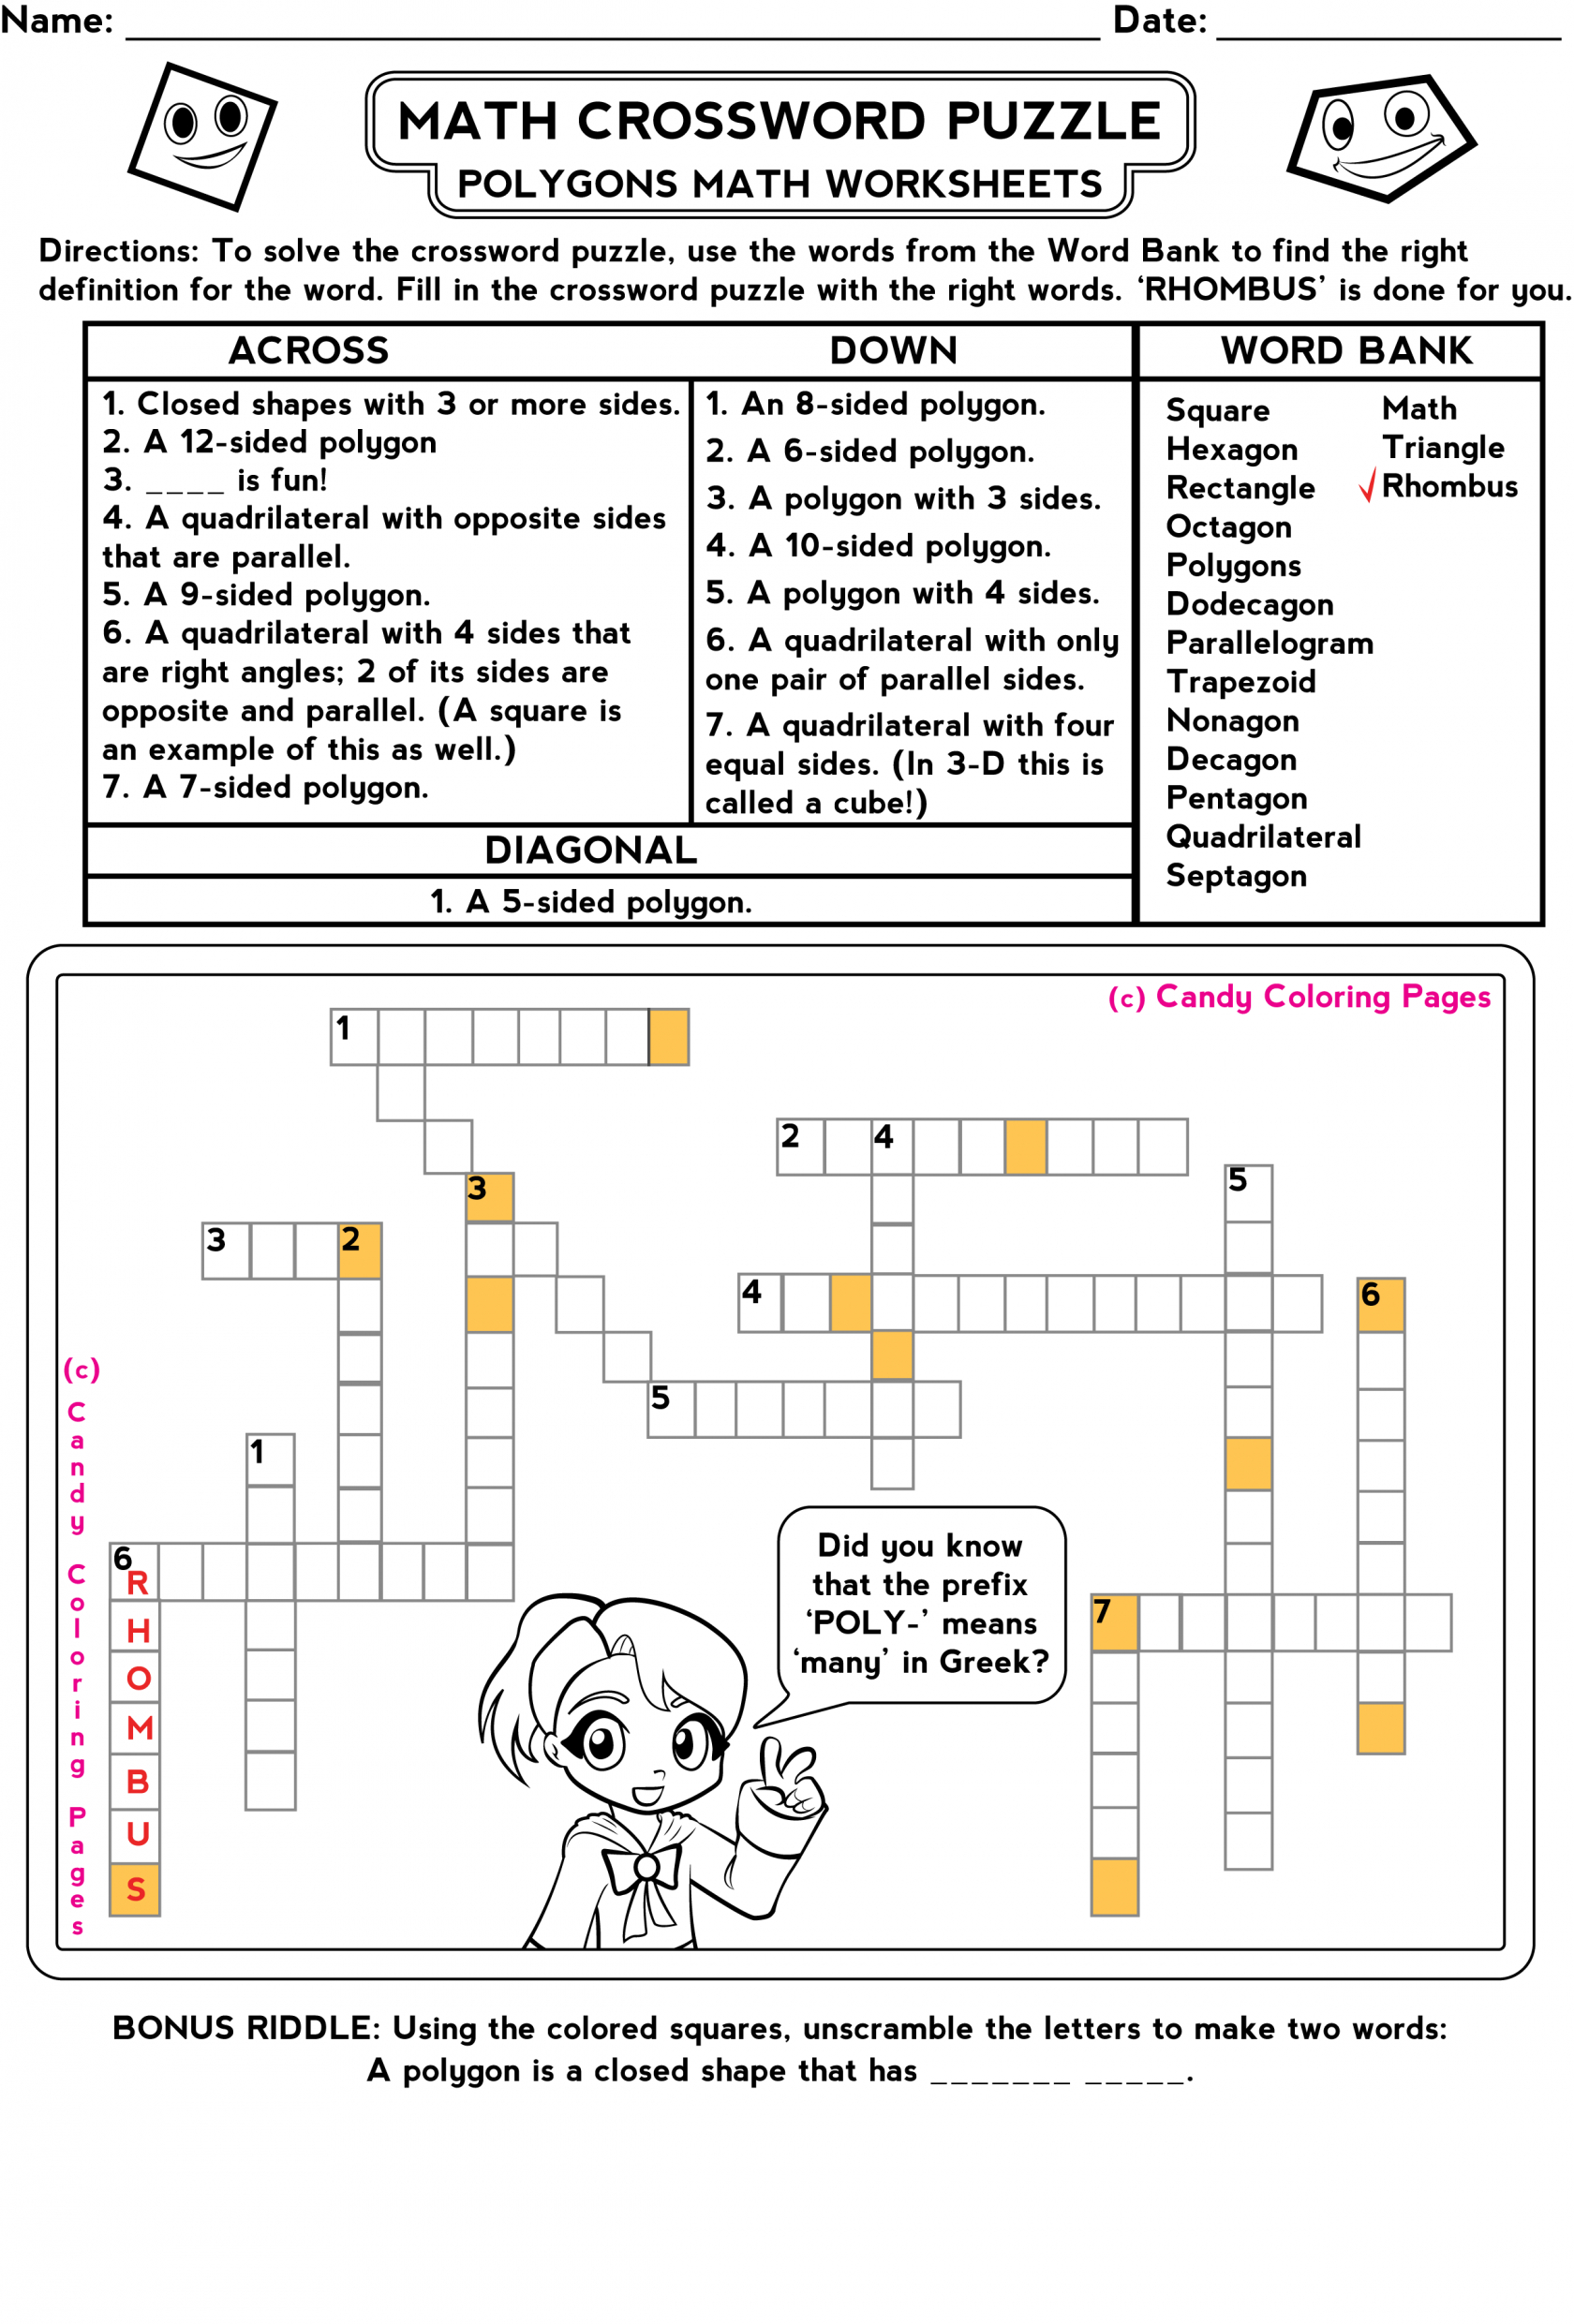 Fun Math Worksheet For 6th Grade